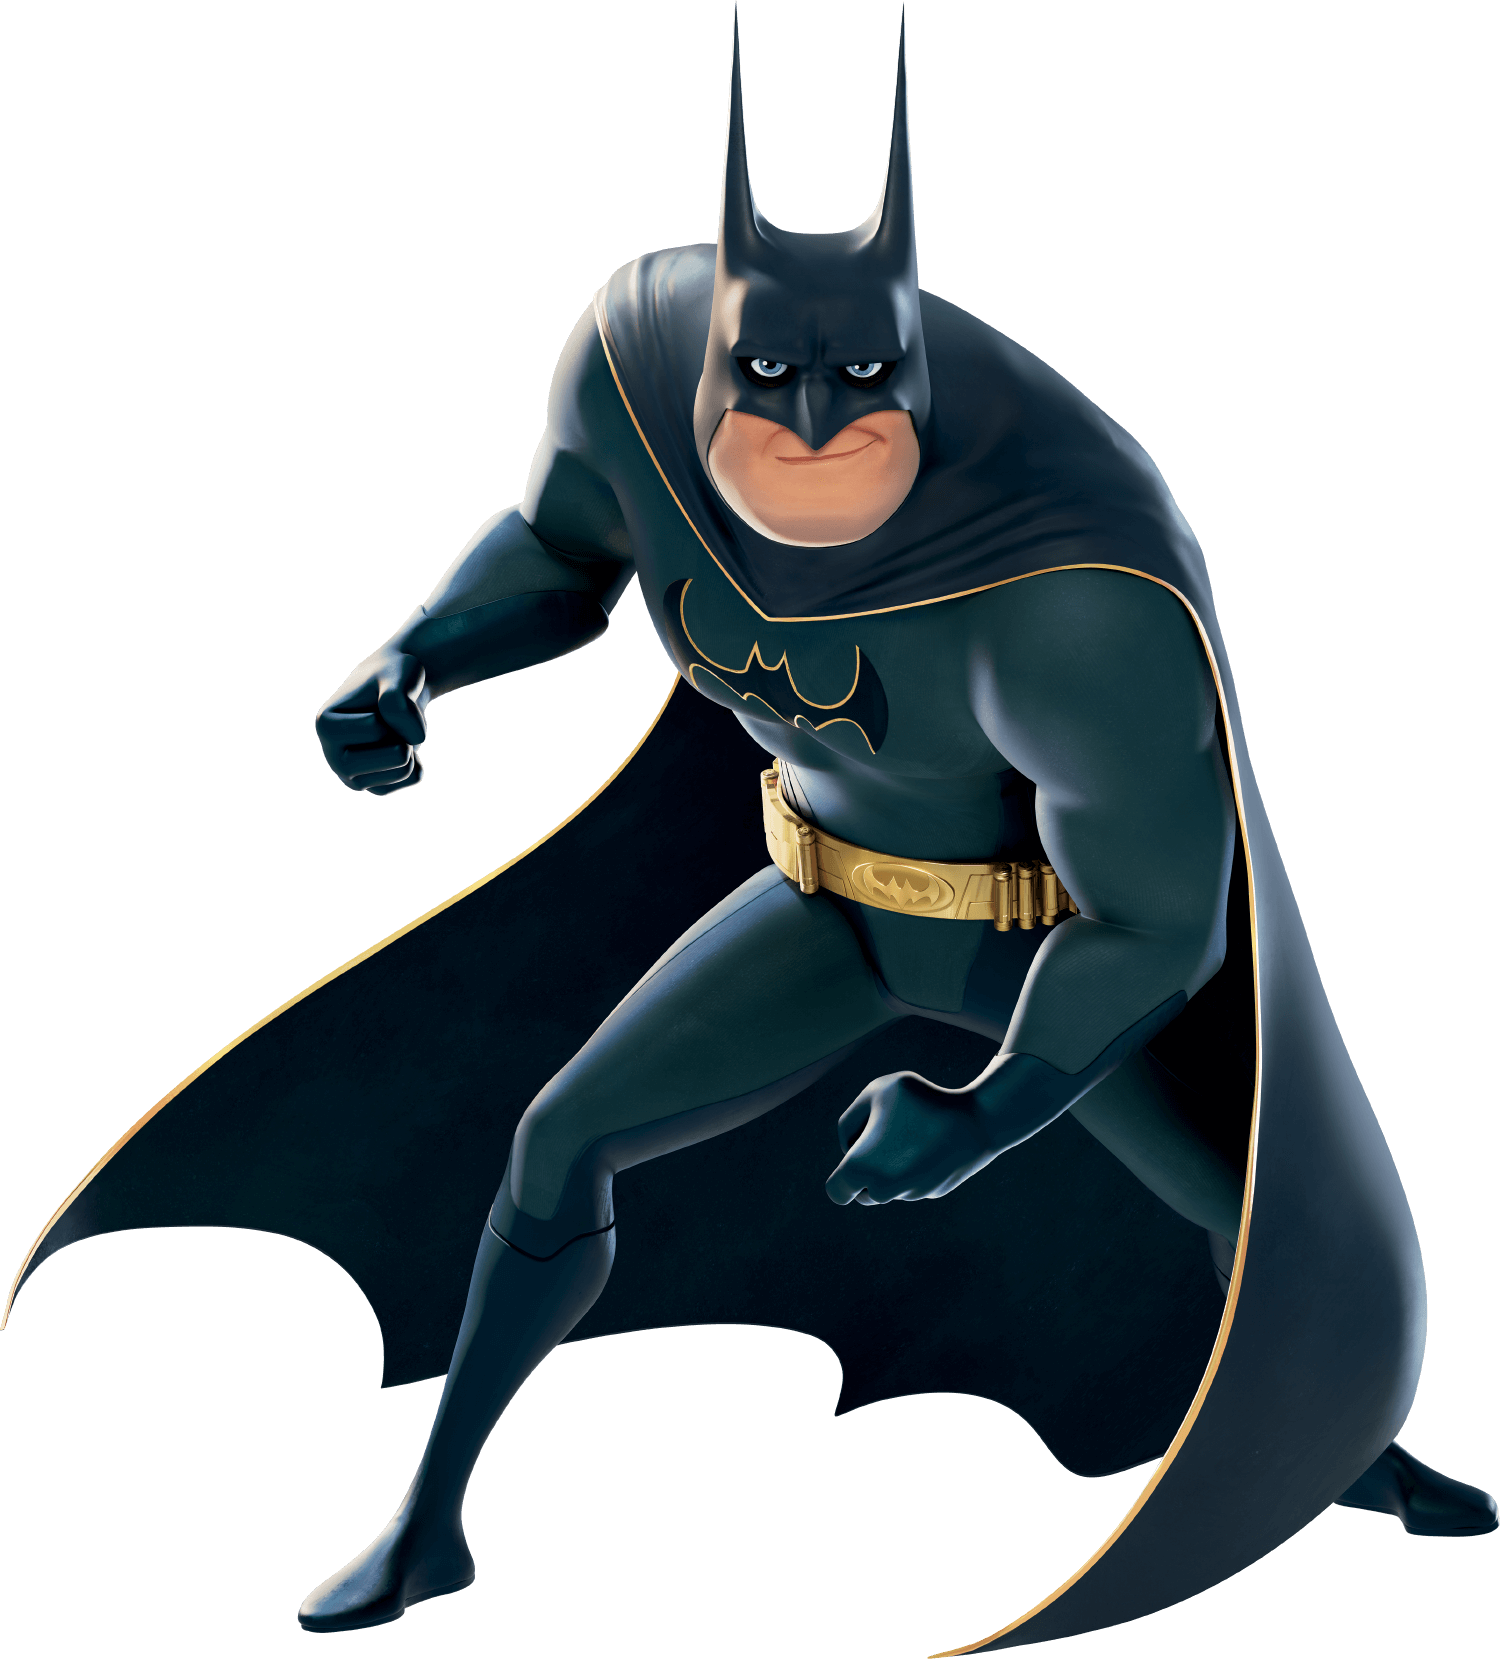 Batman - Zatanna e os Superpets